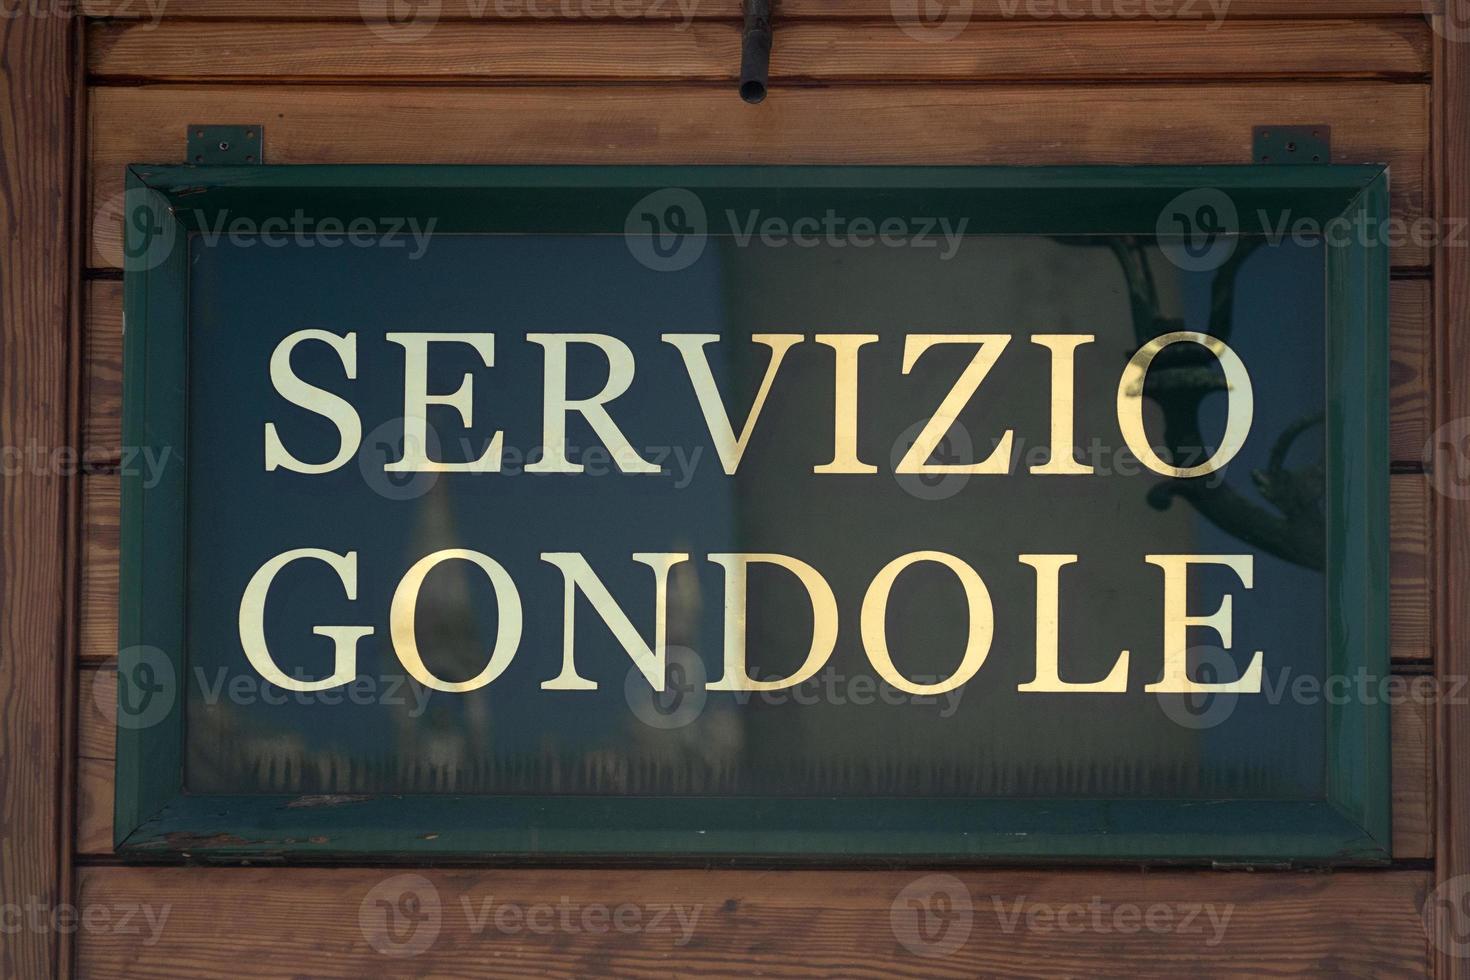 servizio gondel teken in Venetië gondel onderhoud foto